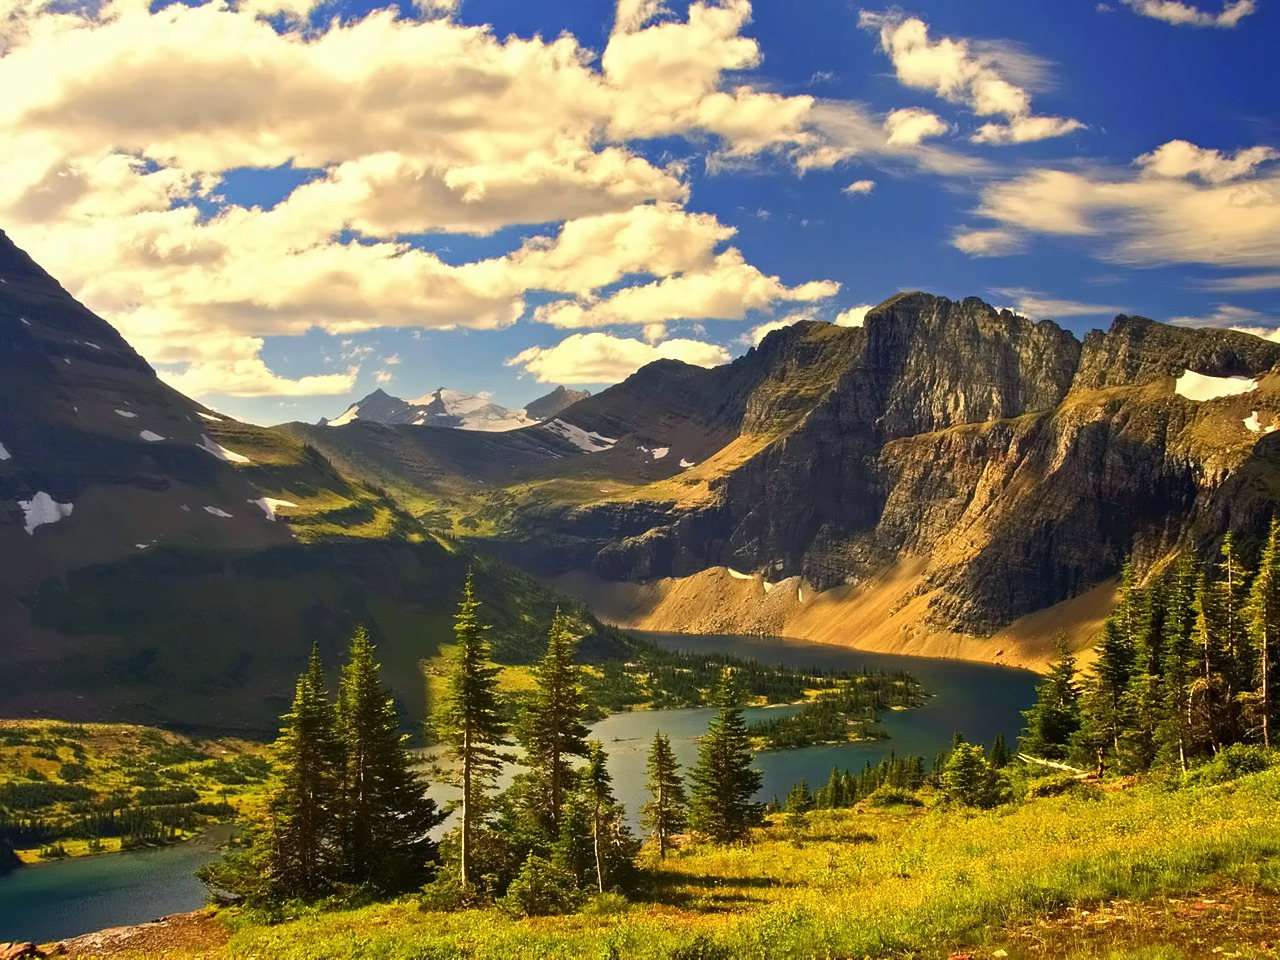 America beauty Journey through America: Montana